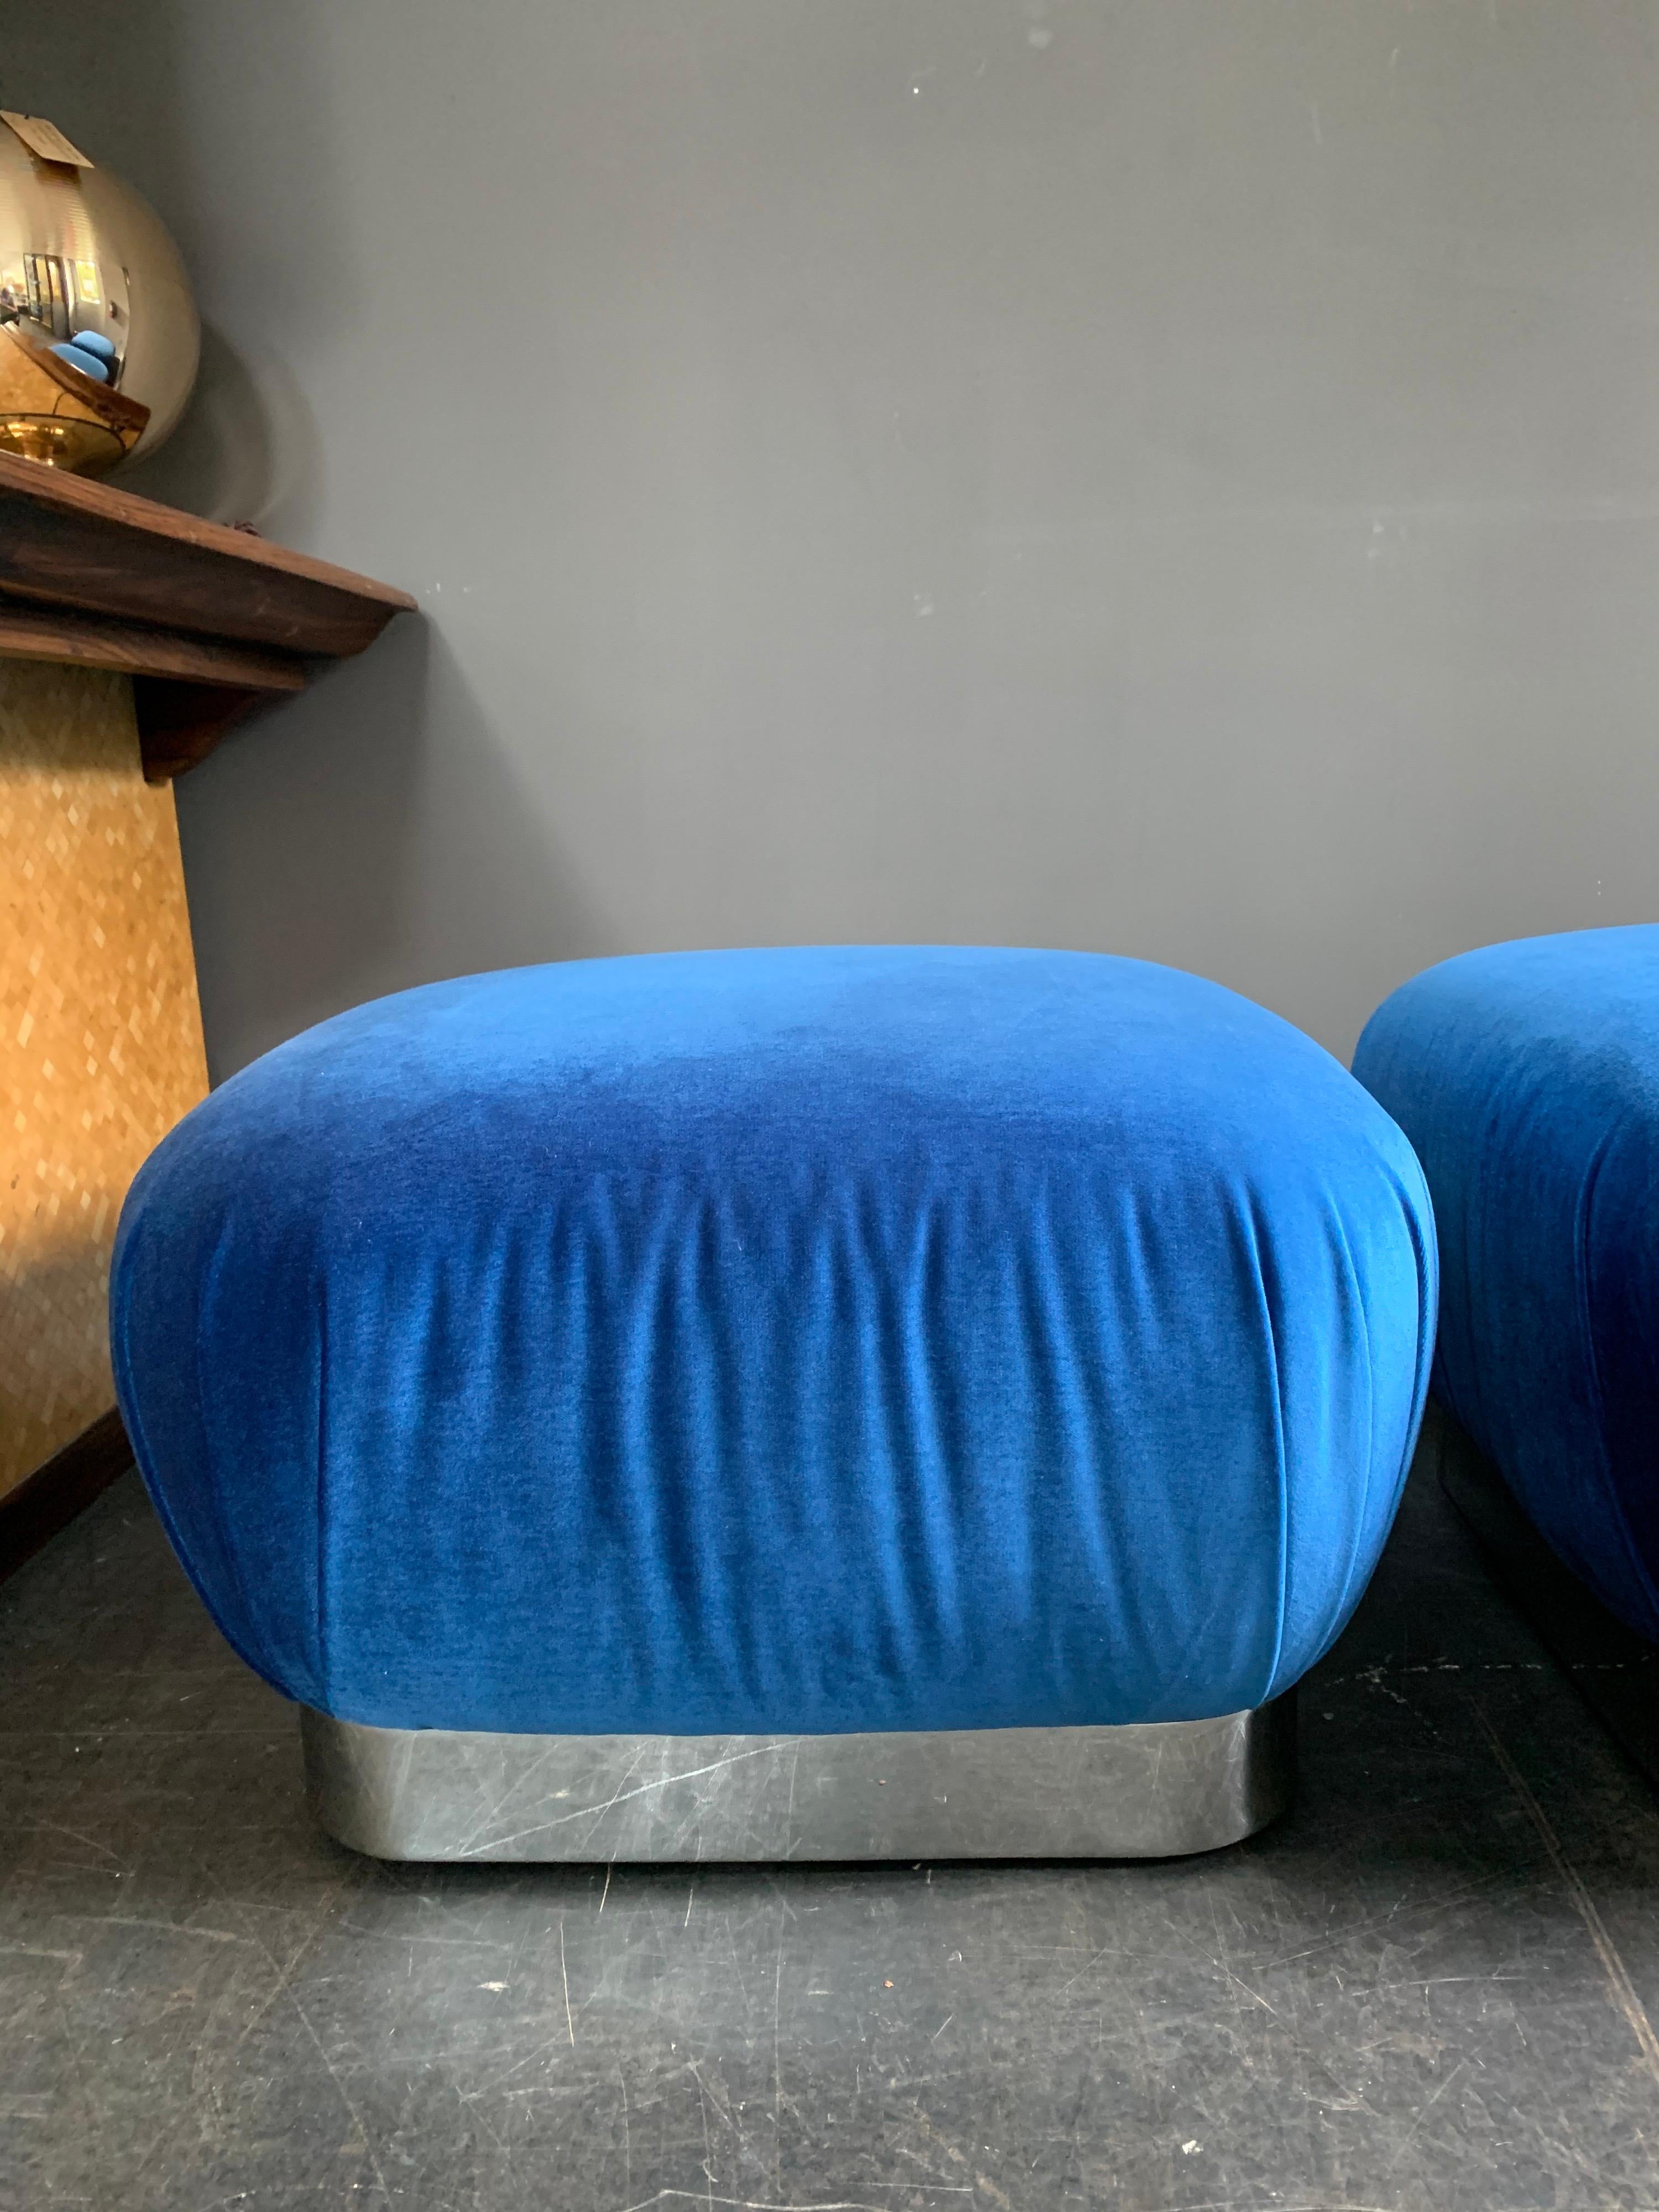 Original pair of Karl Springer Souffle ottomans/poufs on casters for easy moving. Polished steel base and blue velvet upholstery.